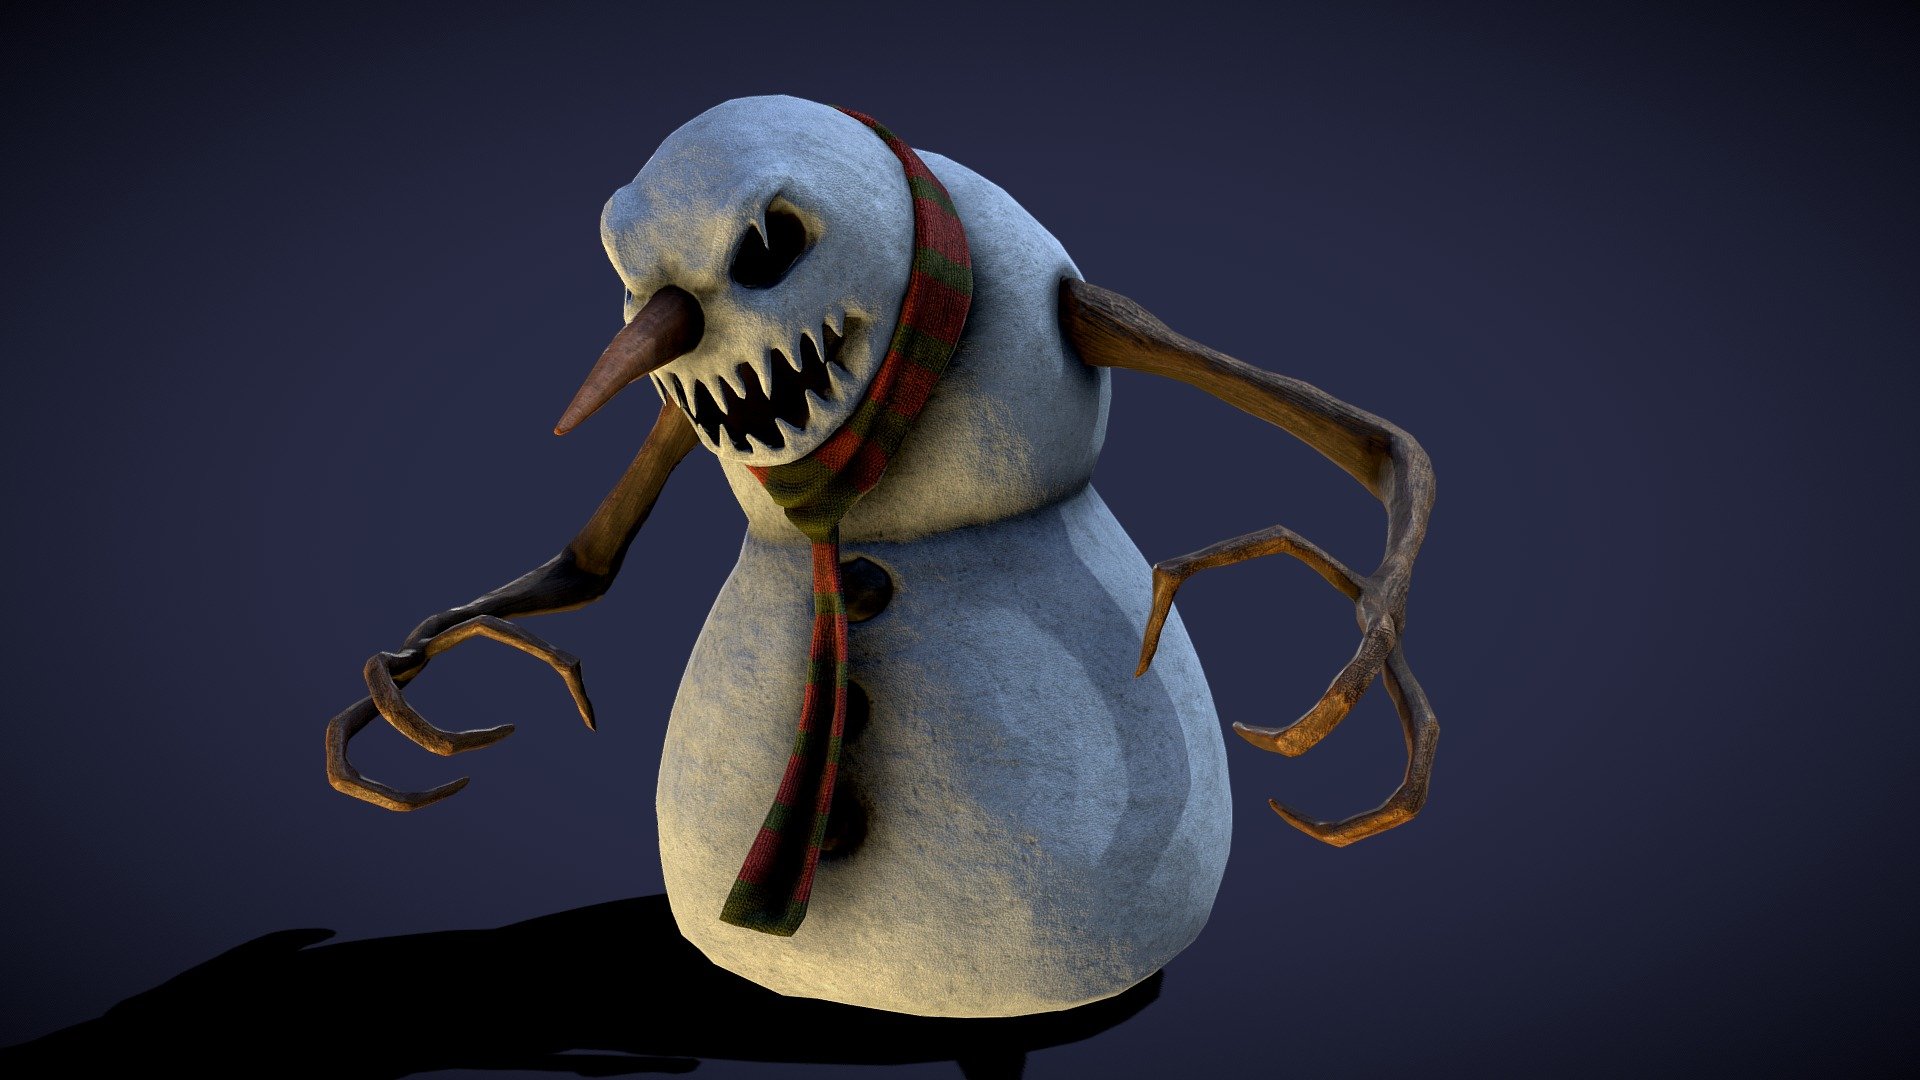 evil snowman sketch